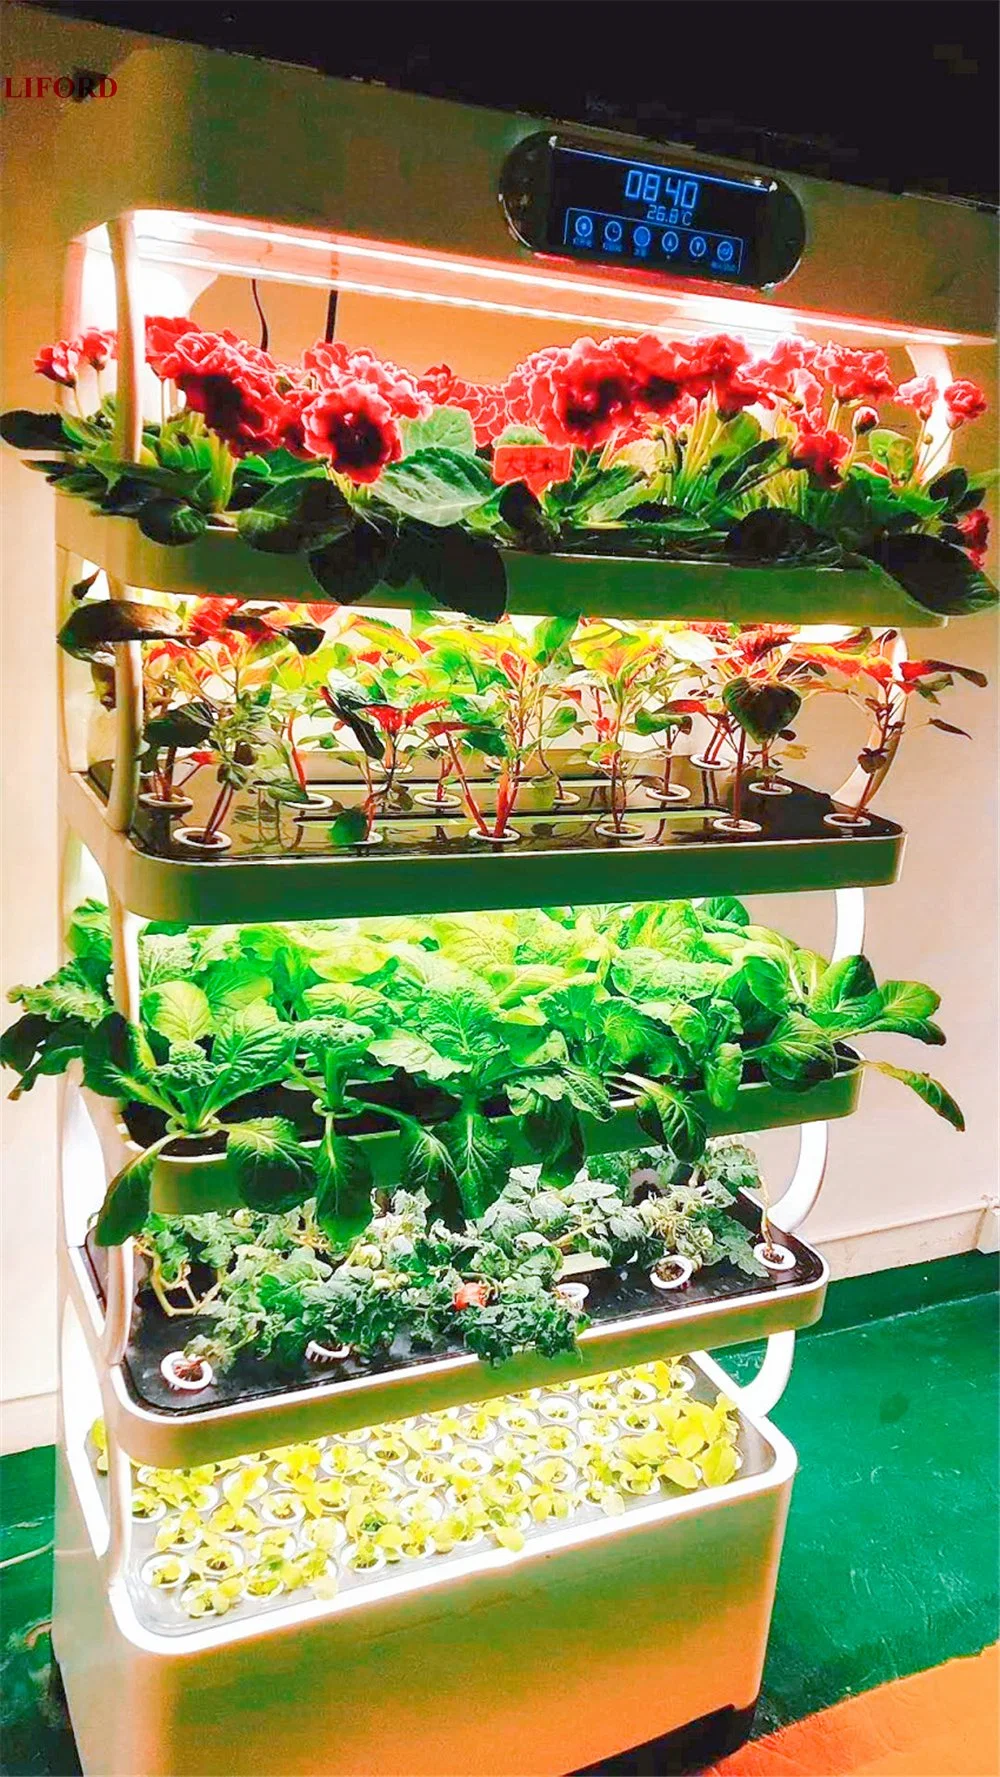 Vertical Hydroponics Systen Nft Hydroponic System Indoor Decorative Home Garden Flower Pot